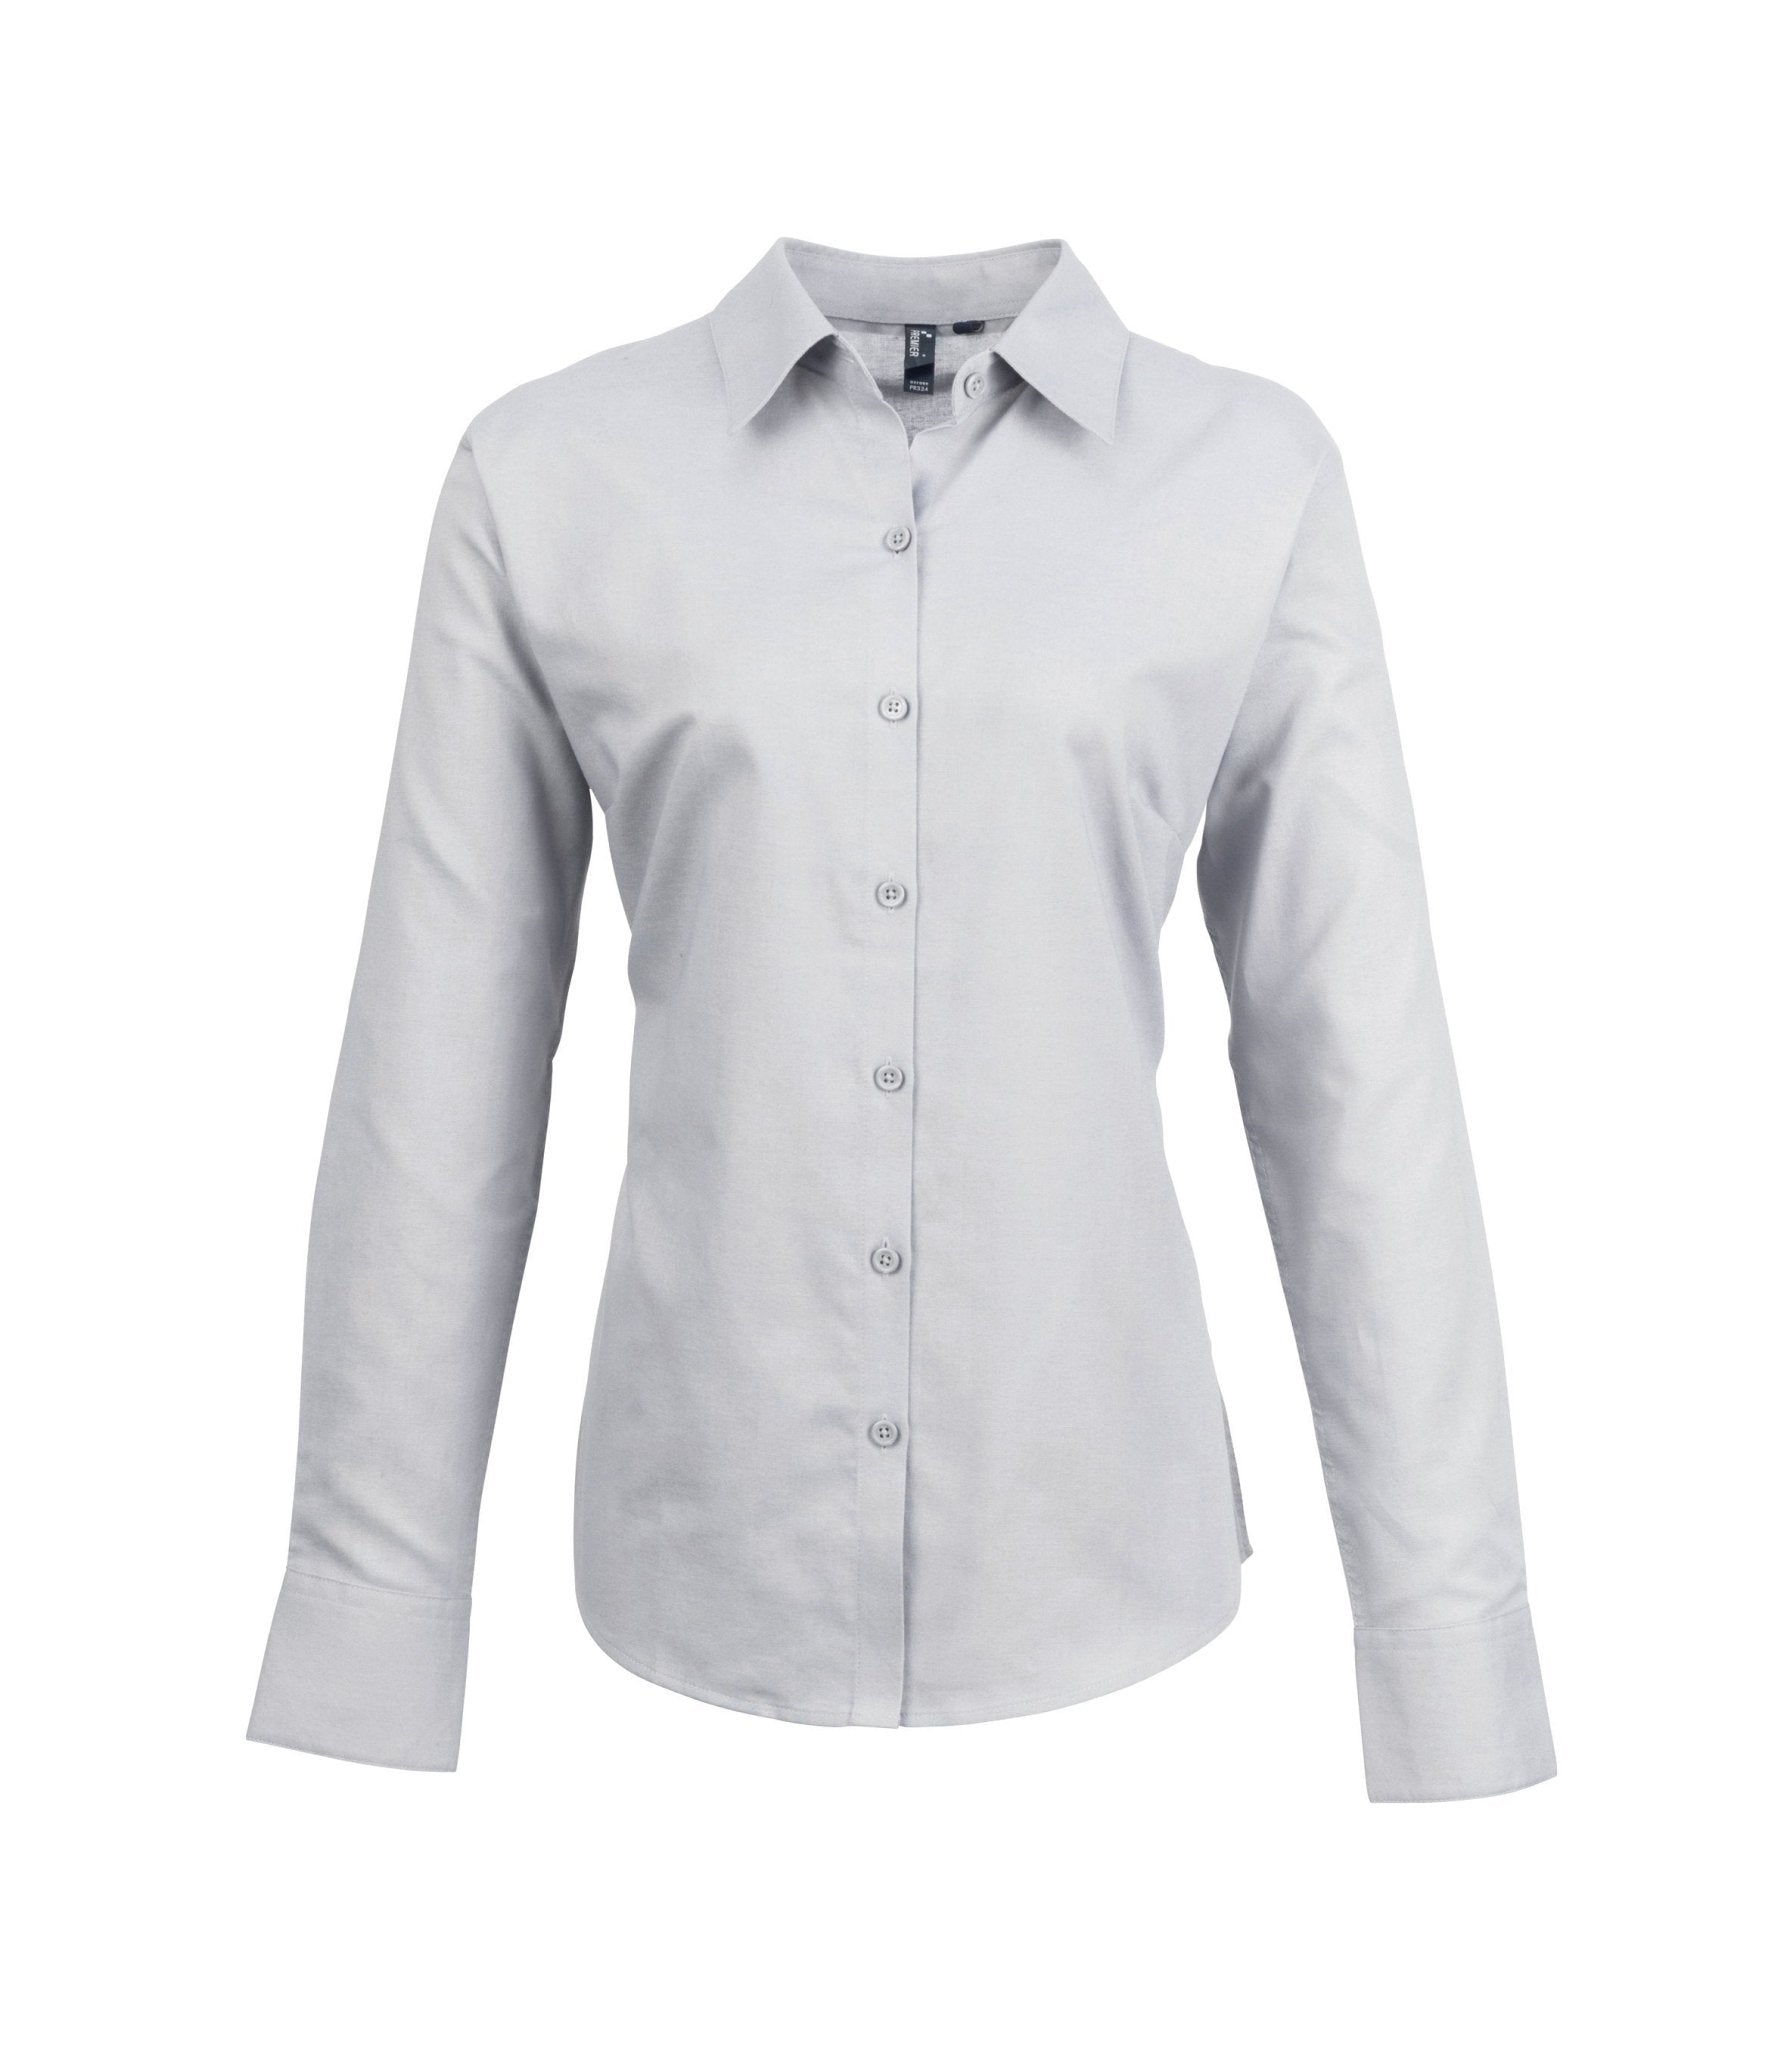 PR334 - Signature Oxford Shirt – The Staff Uniform Company